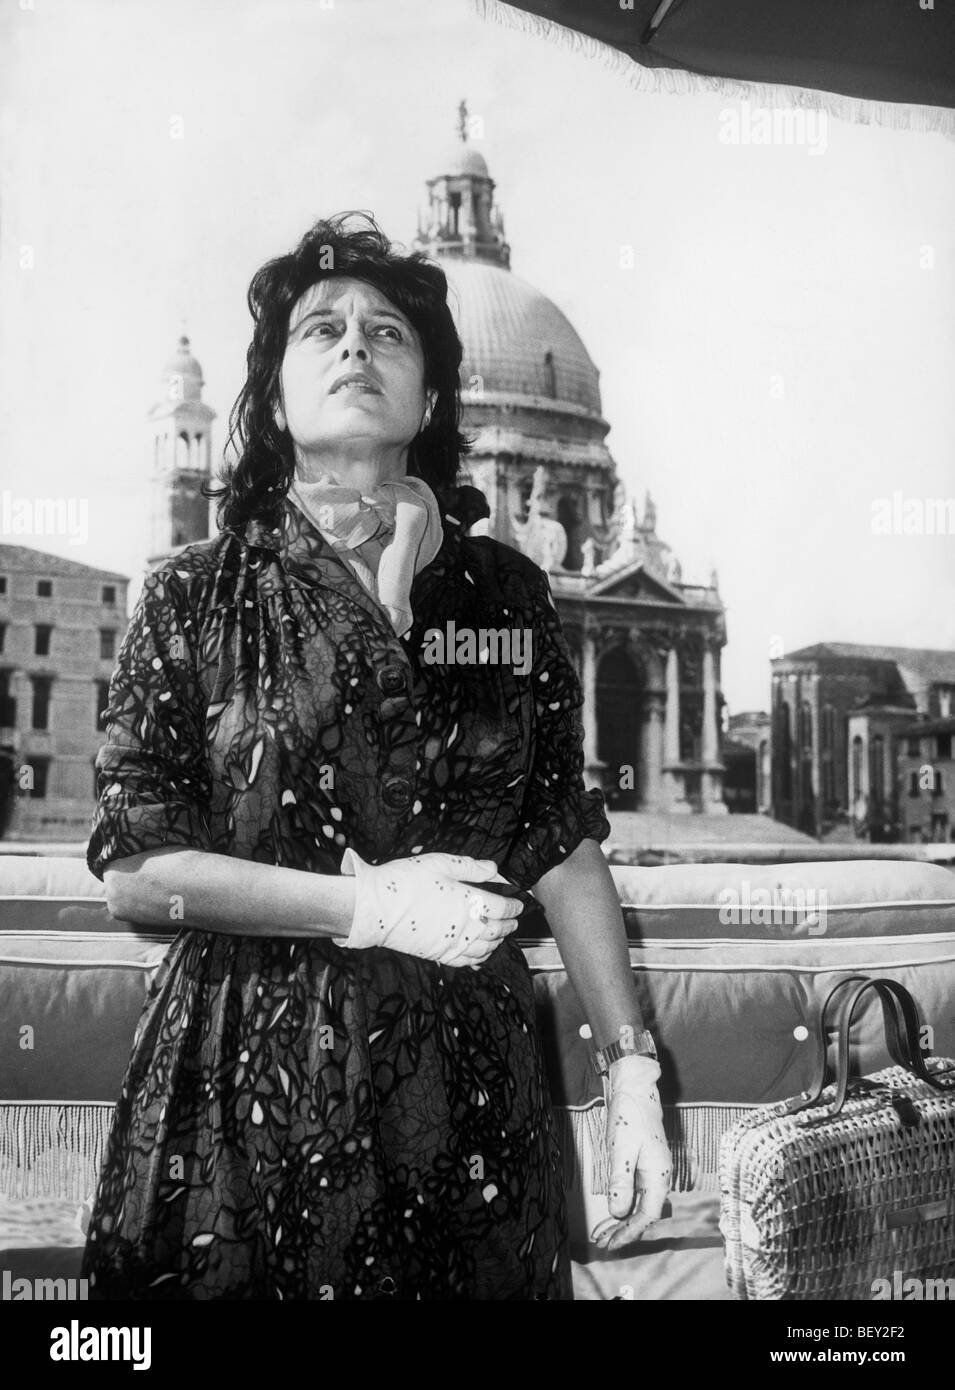 anna magnani, venice 1961 Stock Photo - Alamy